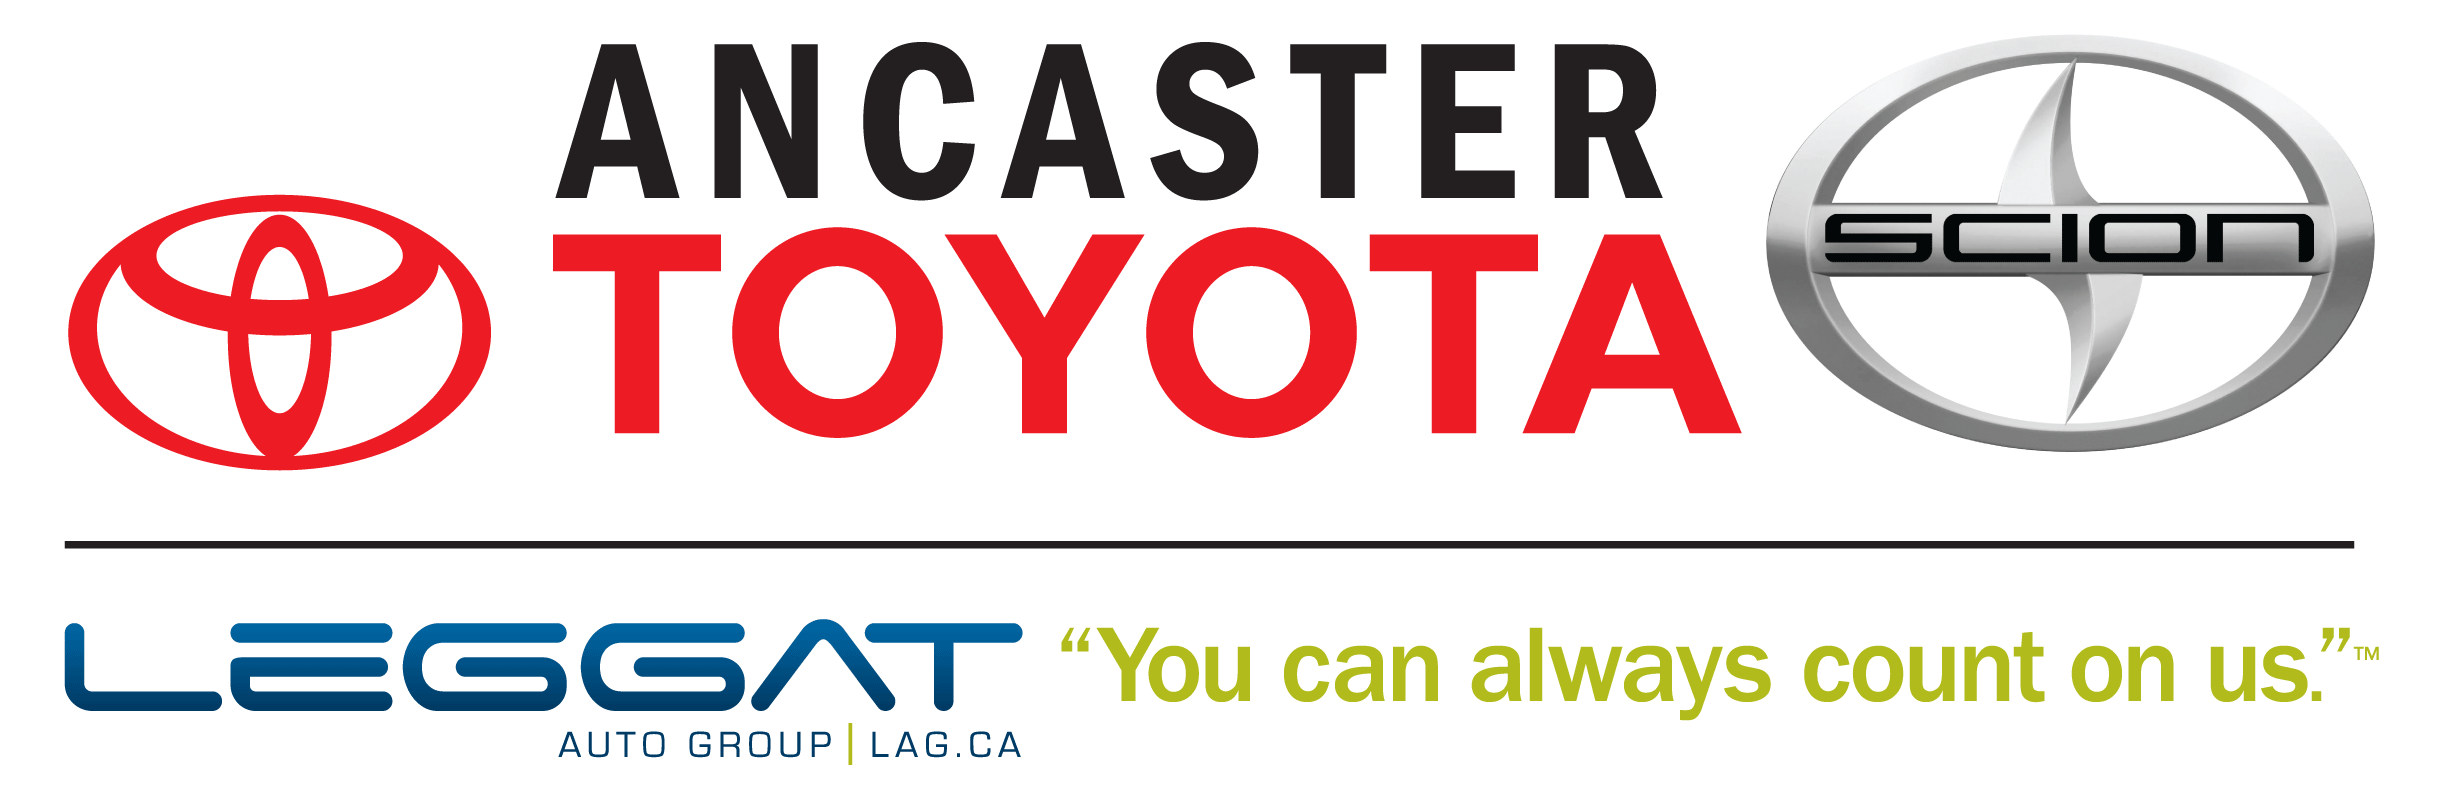 Ancaster Toyota